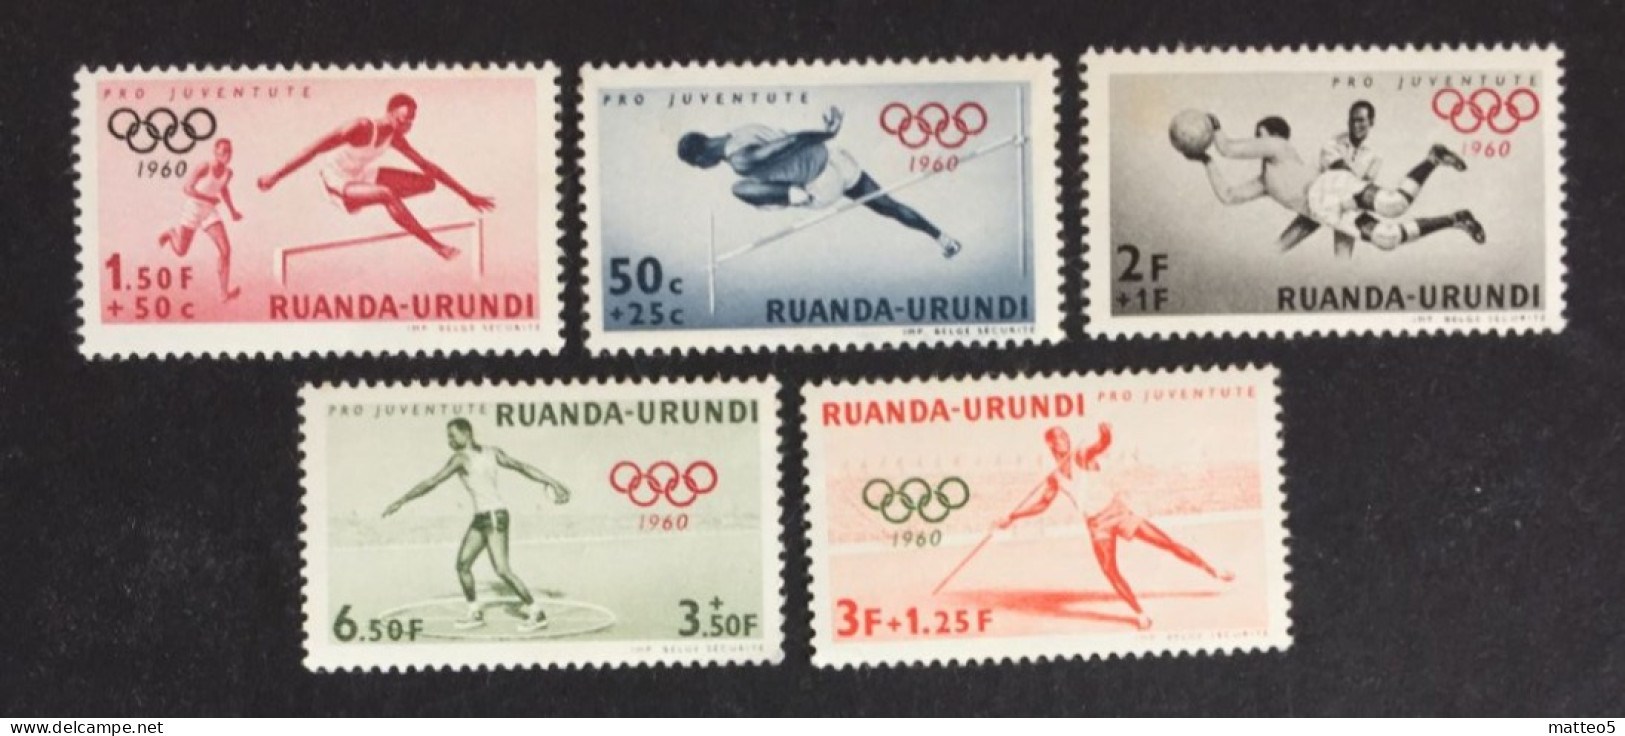 1960 - Rwanda Urundi - Summer Olympic Games 1960 - Rome - 5 Stamps Unused - Unused Stamps